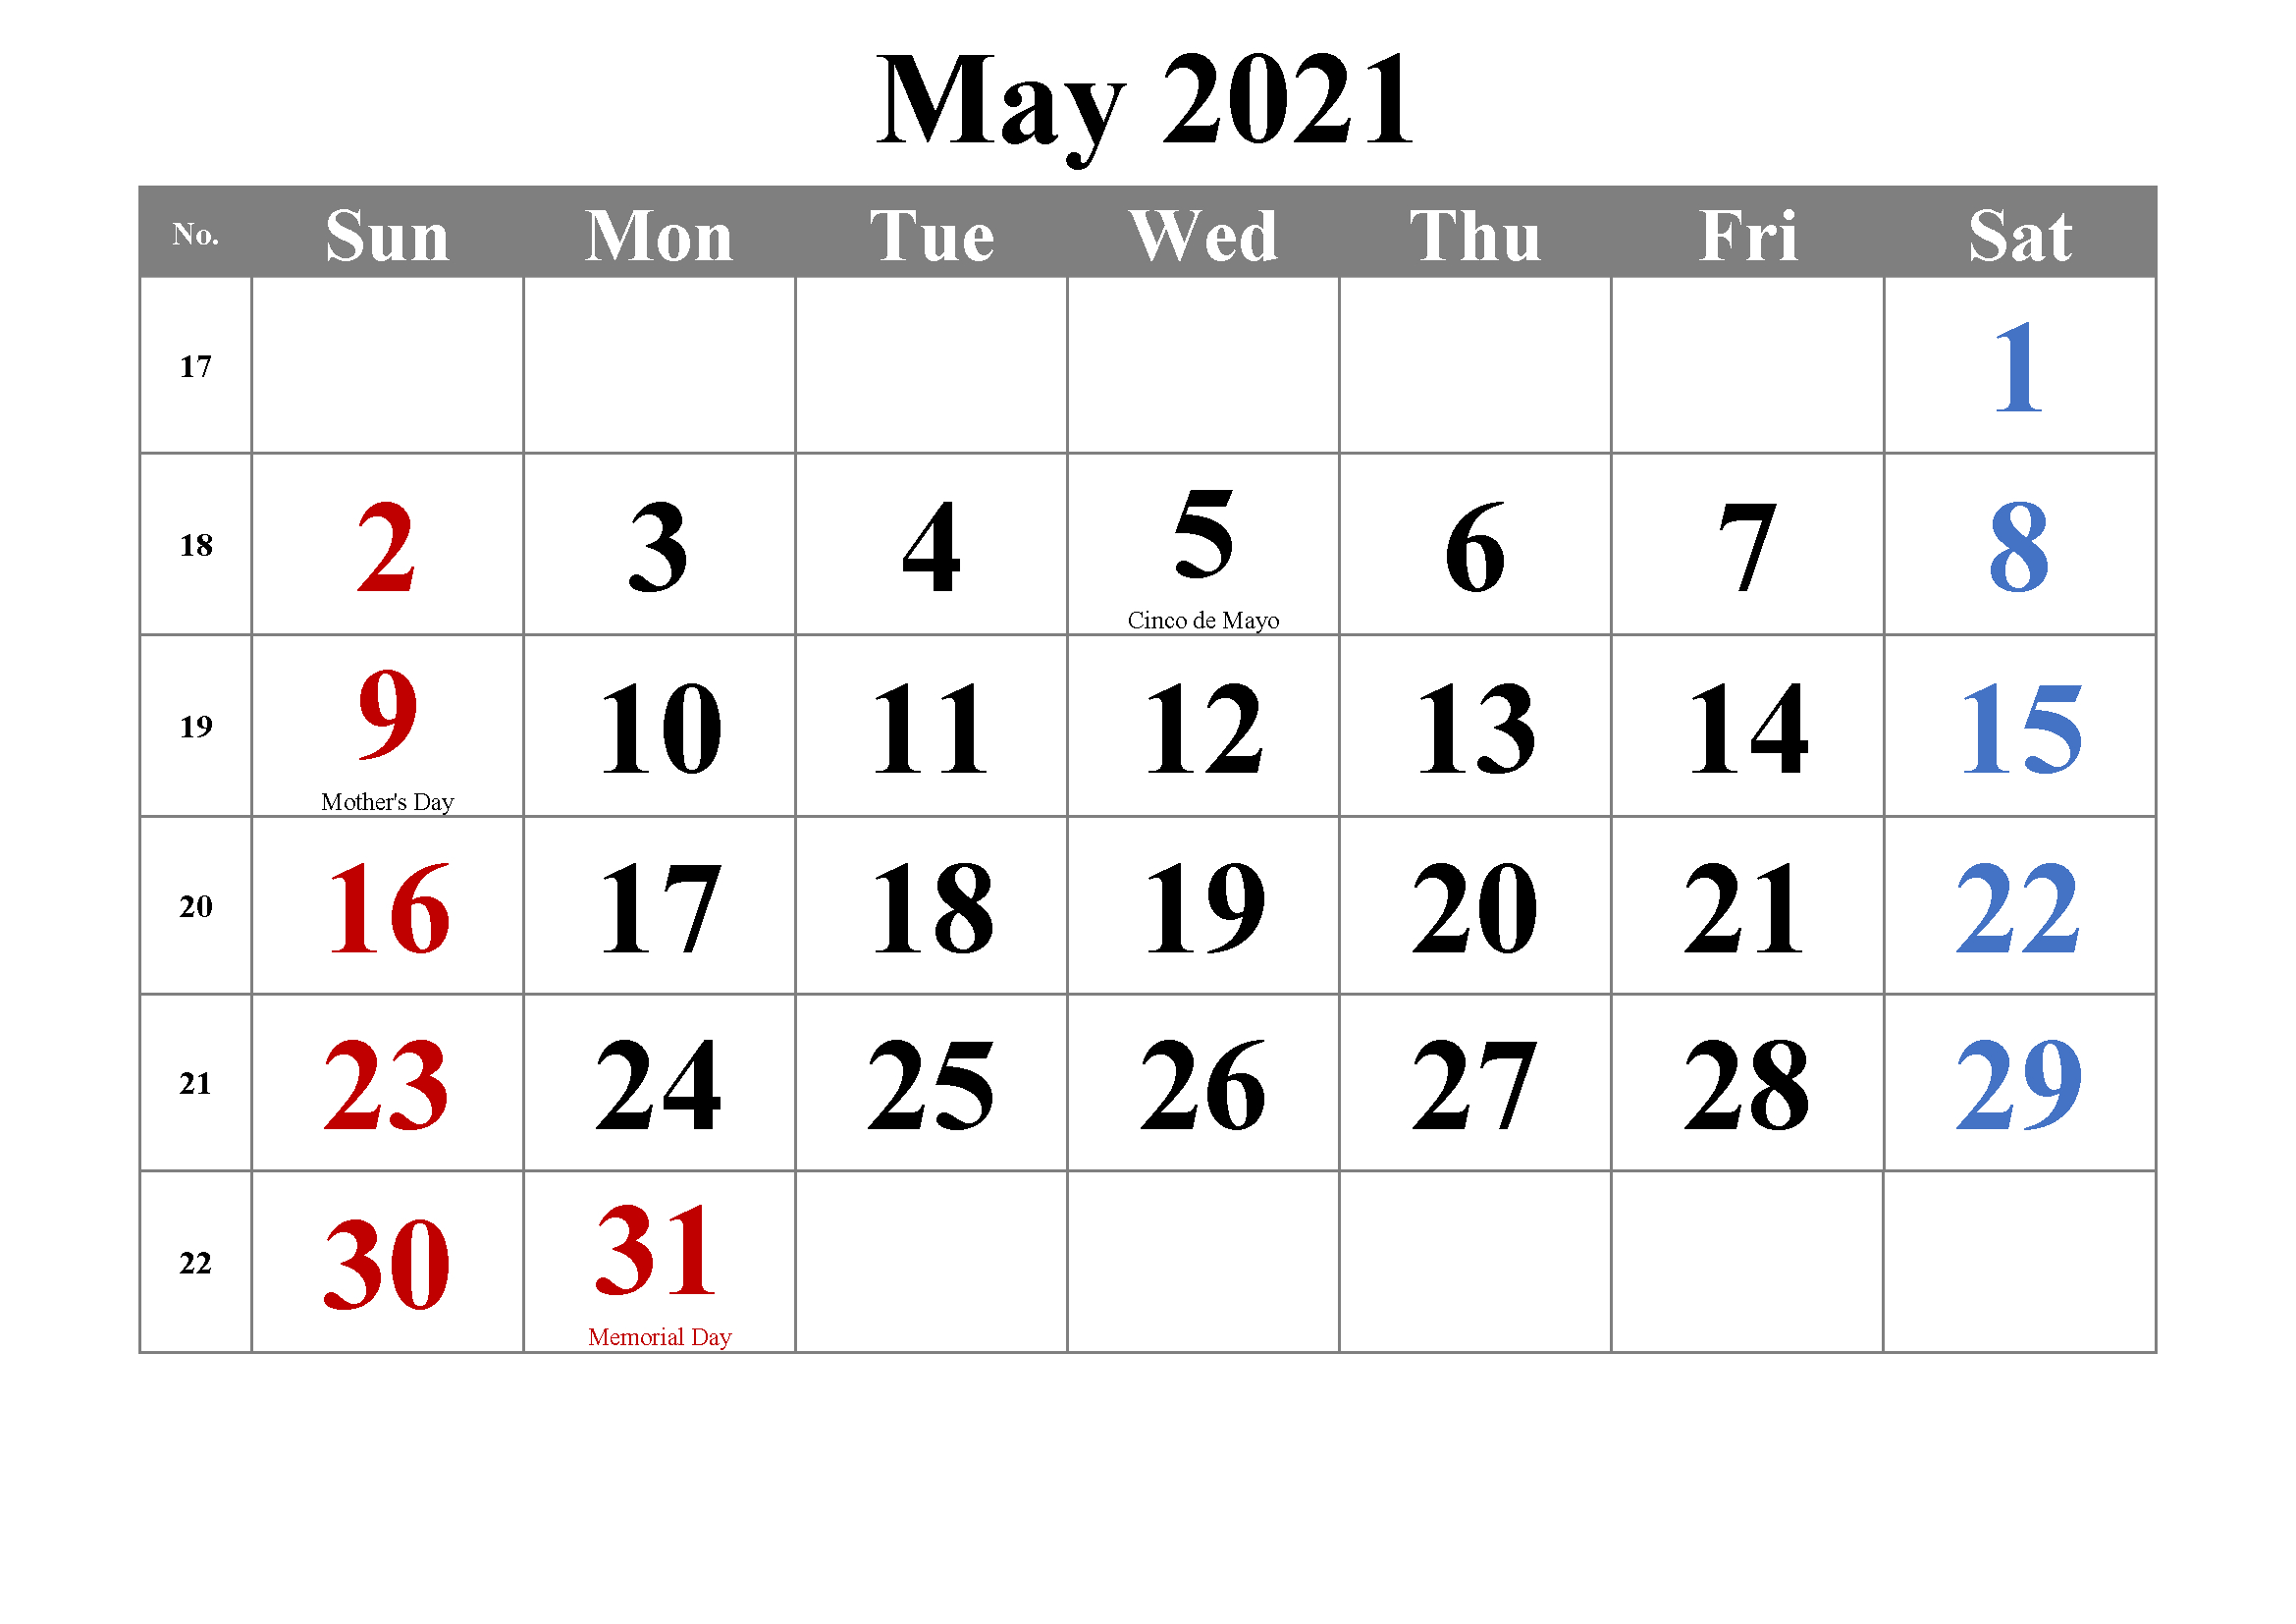 May 2021 Calendar Printable With Pdf - Thecalendarpedia-Calendar May 2021